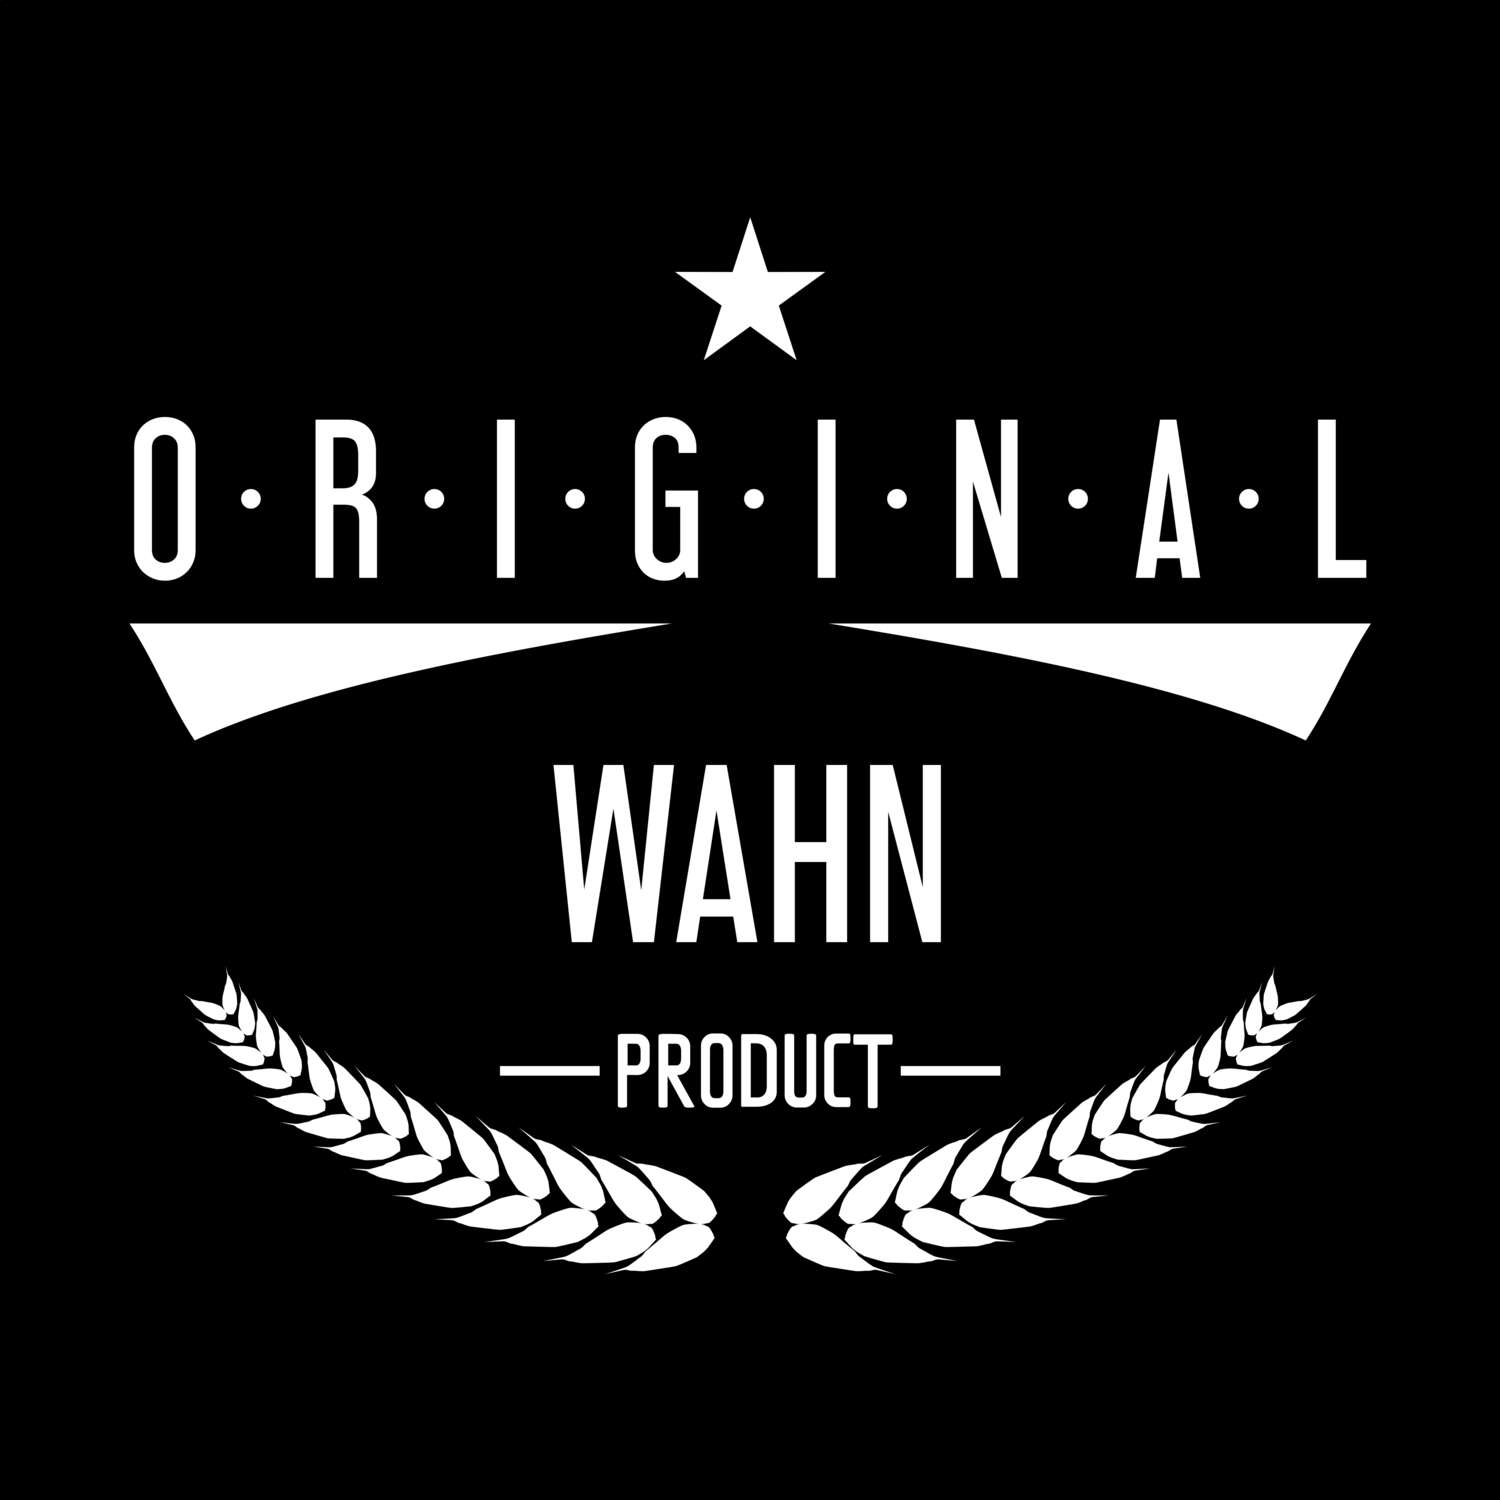 Wahn T-Shirt »Original Product«